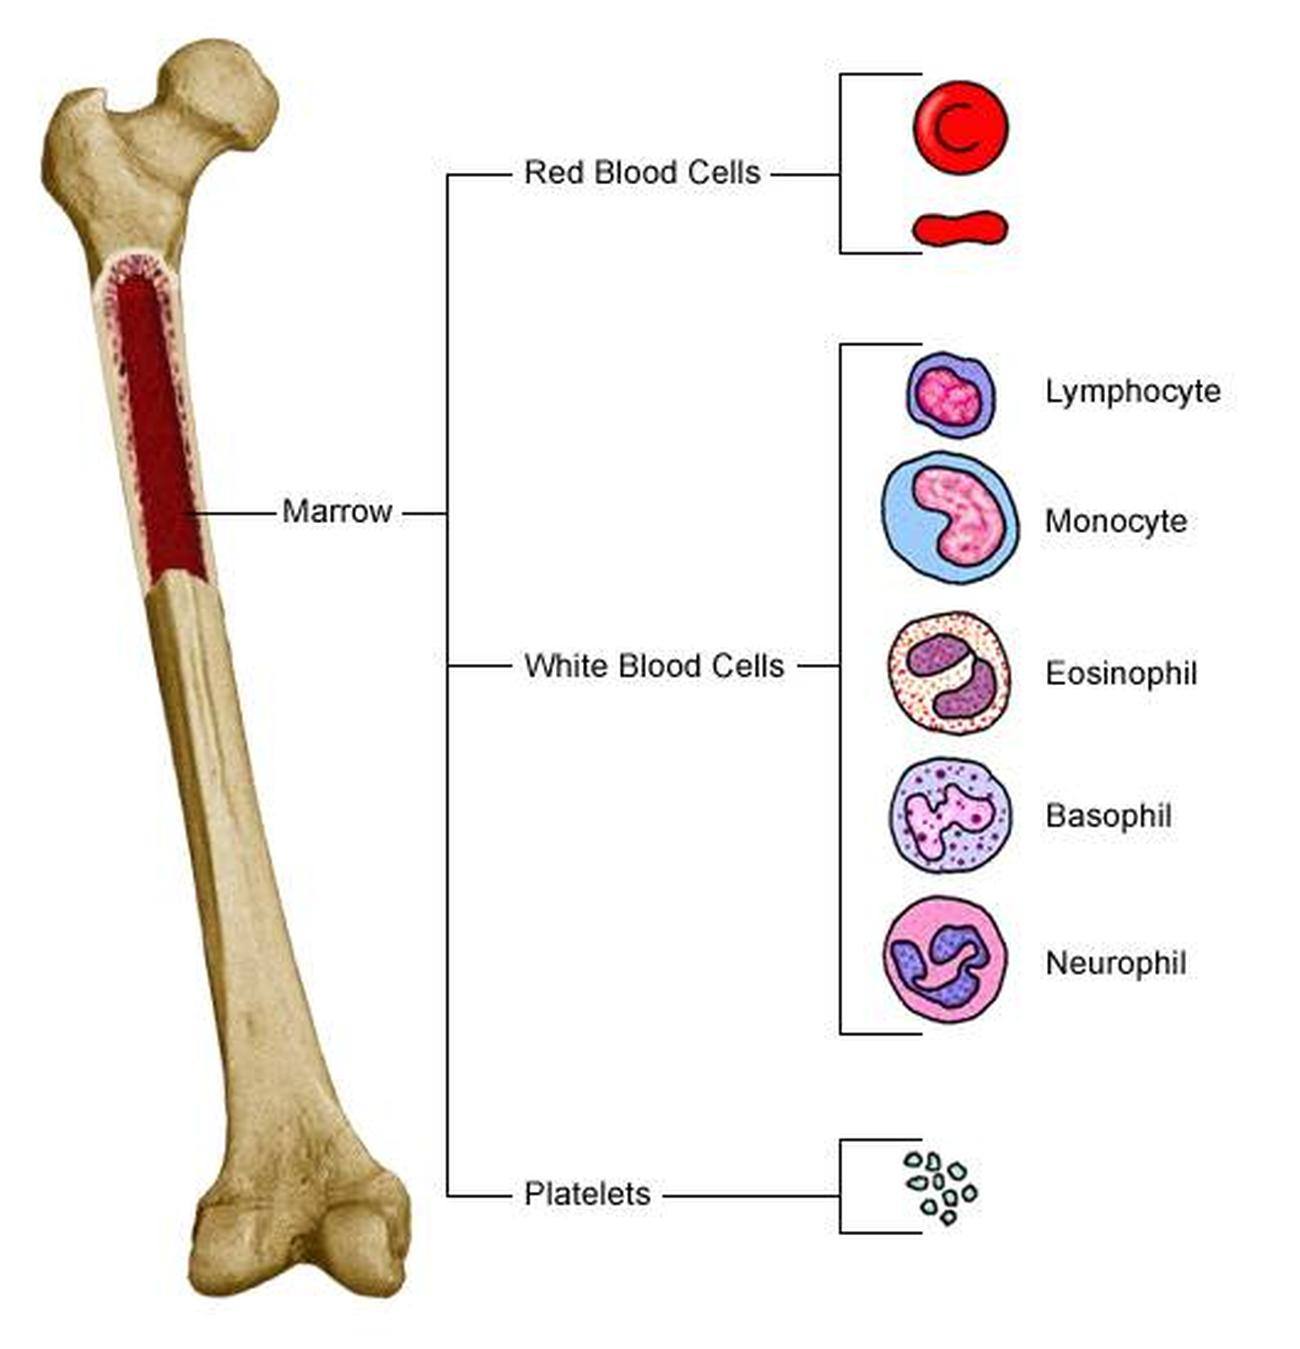 Pictures Of Bone Marrow